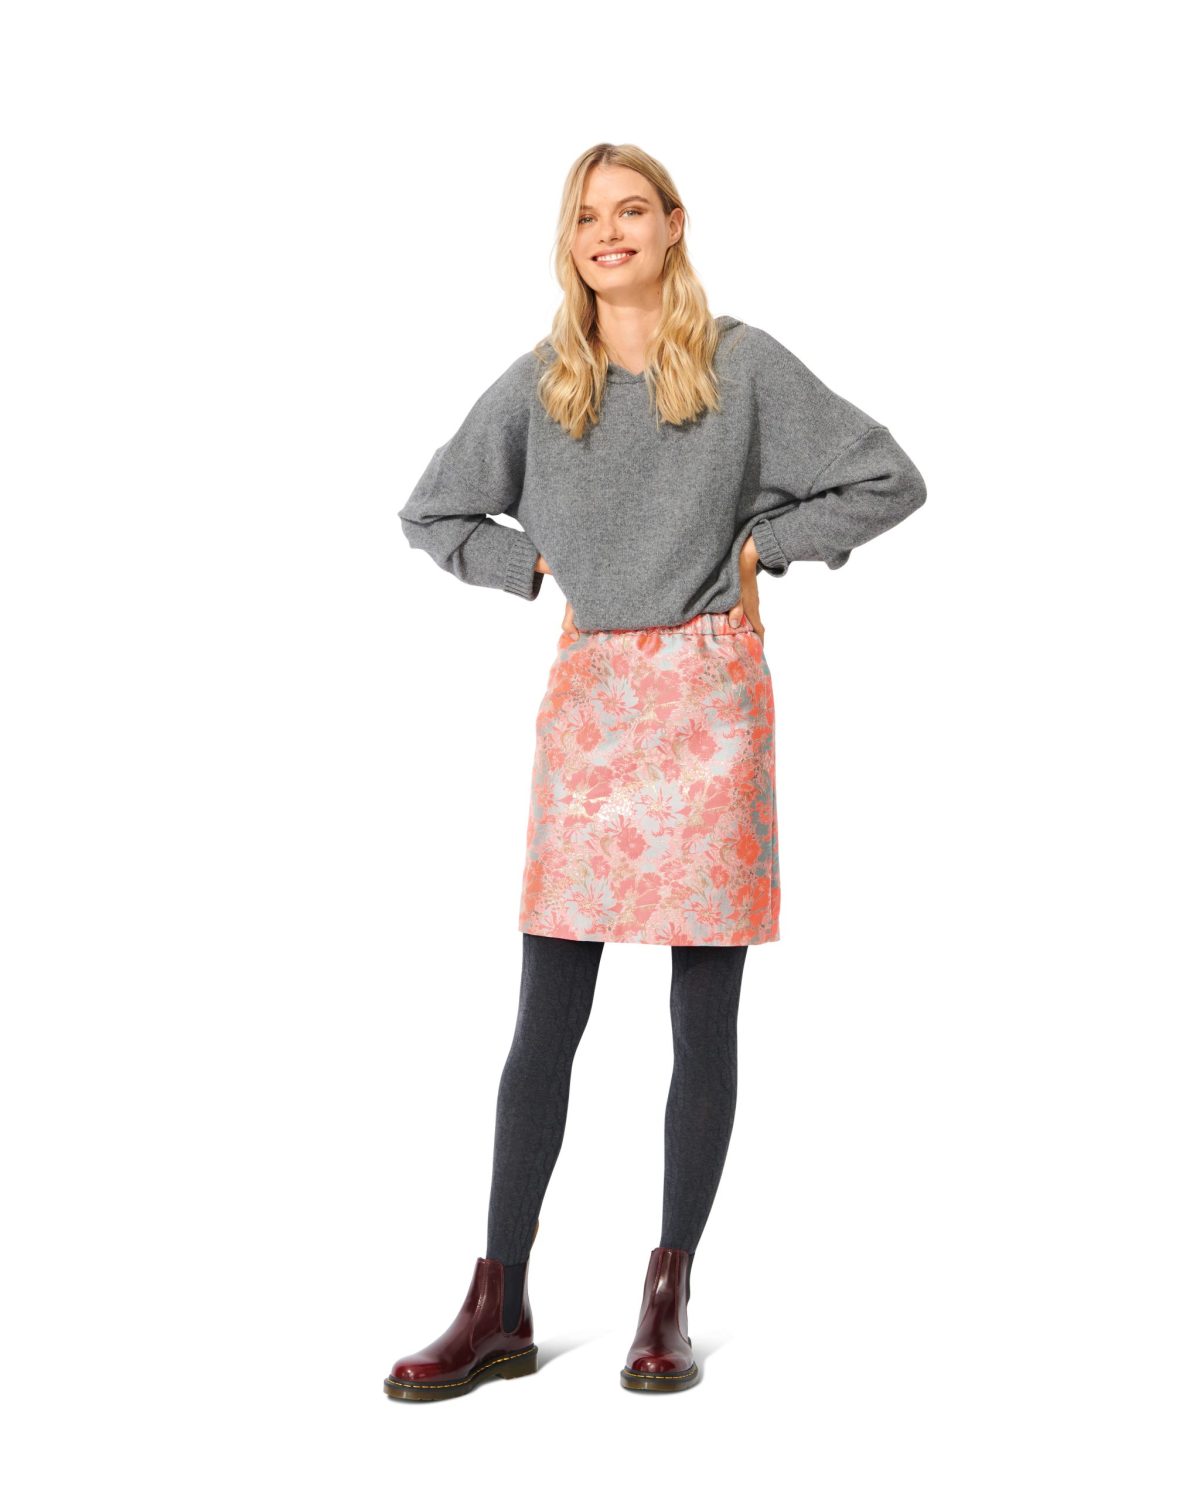 Burda Style Pattern 6073 Misses' Skirt in Three Lengths